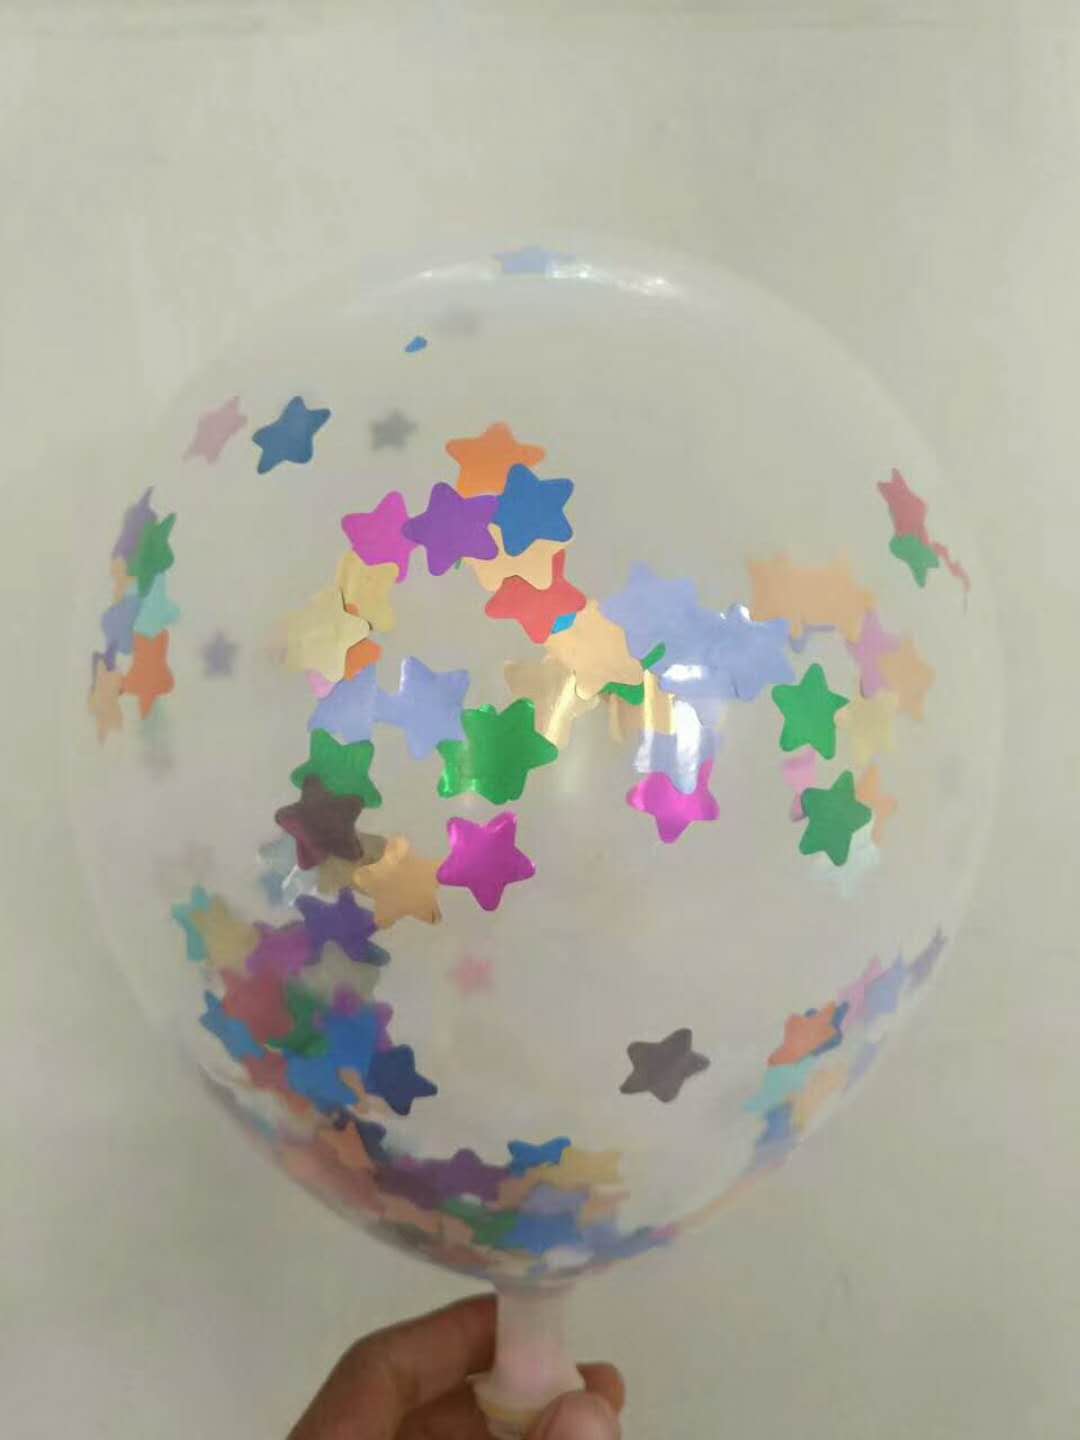 Confetti Balloon